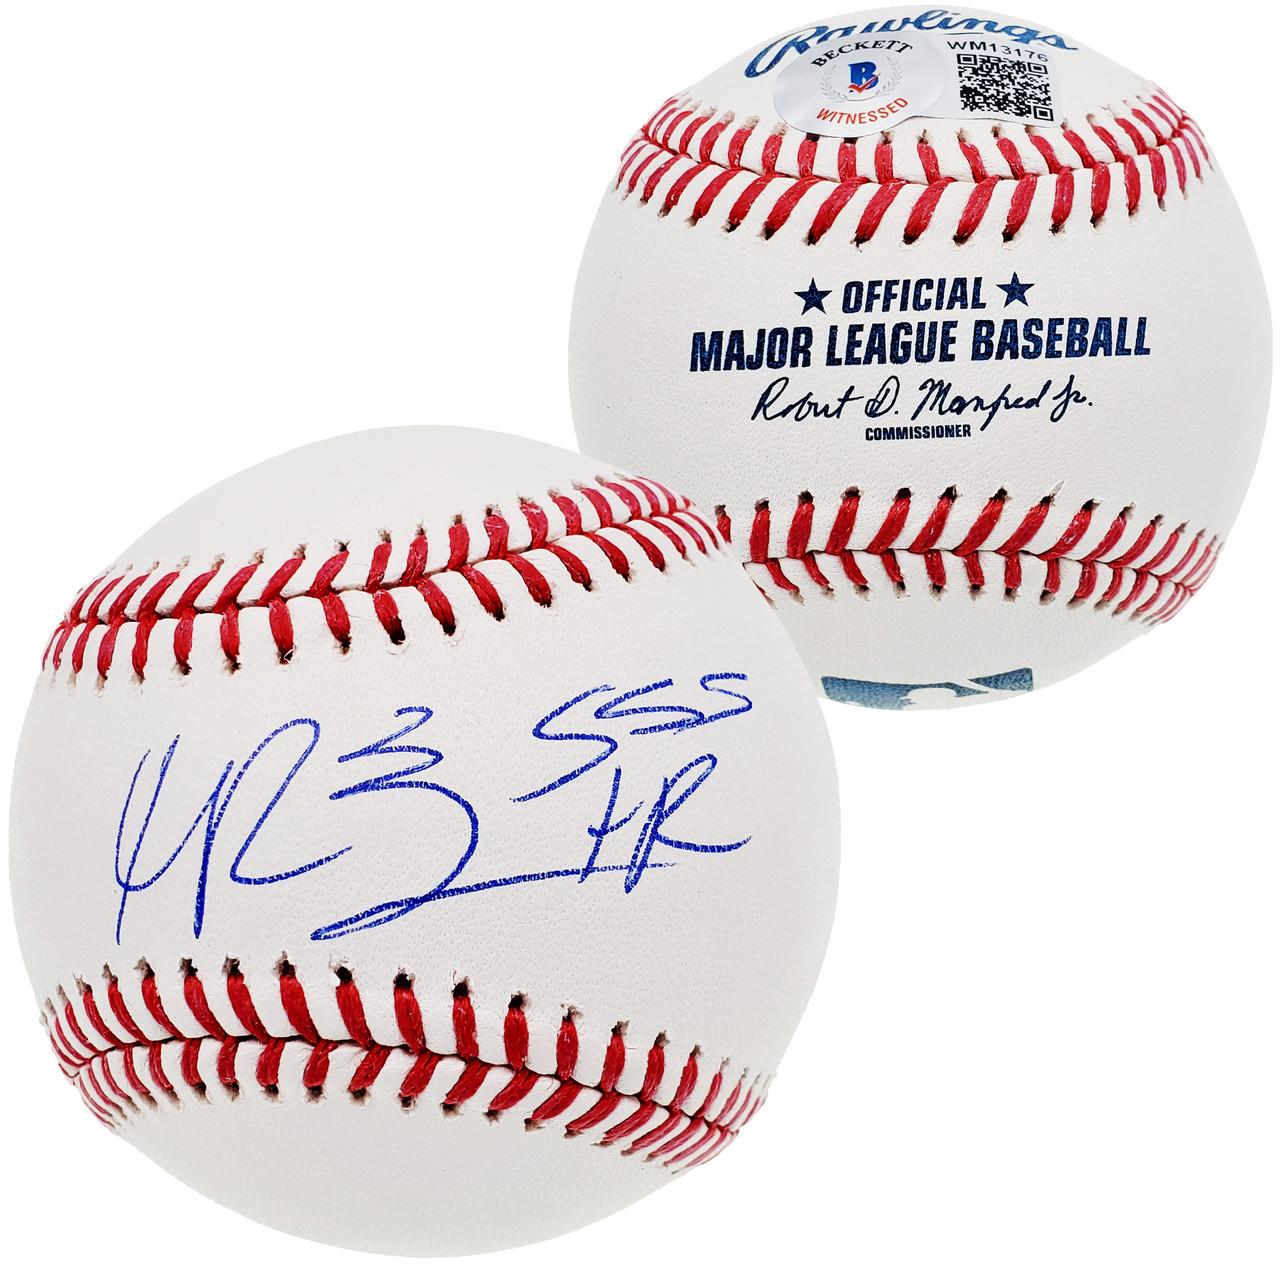 Shop Manny Ramirez Boston Red Sox Signed Official MLB Baseball 555 HR